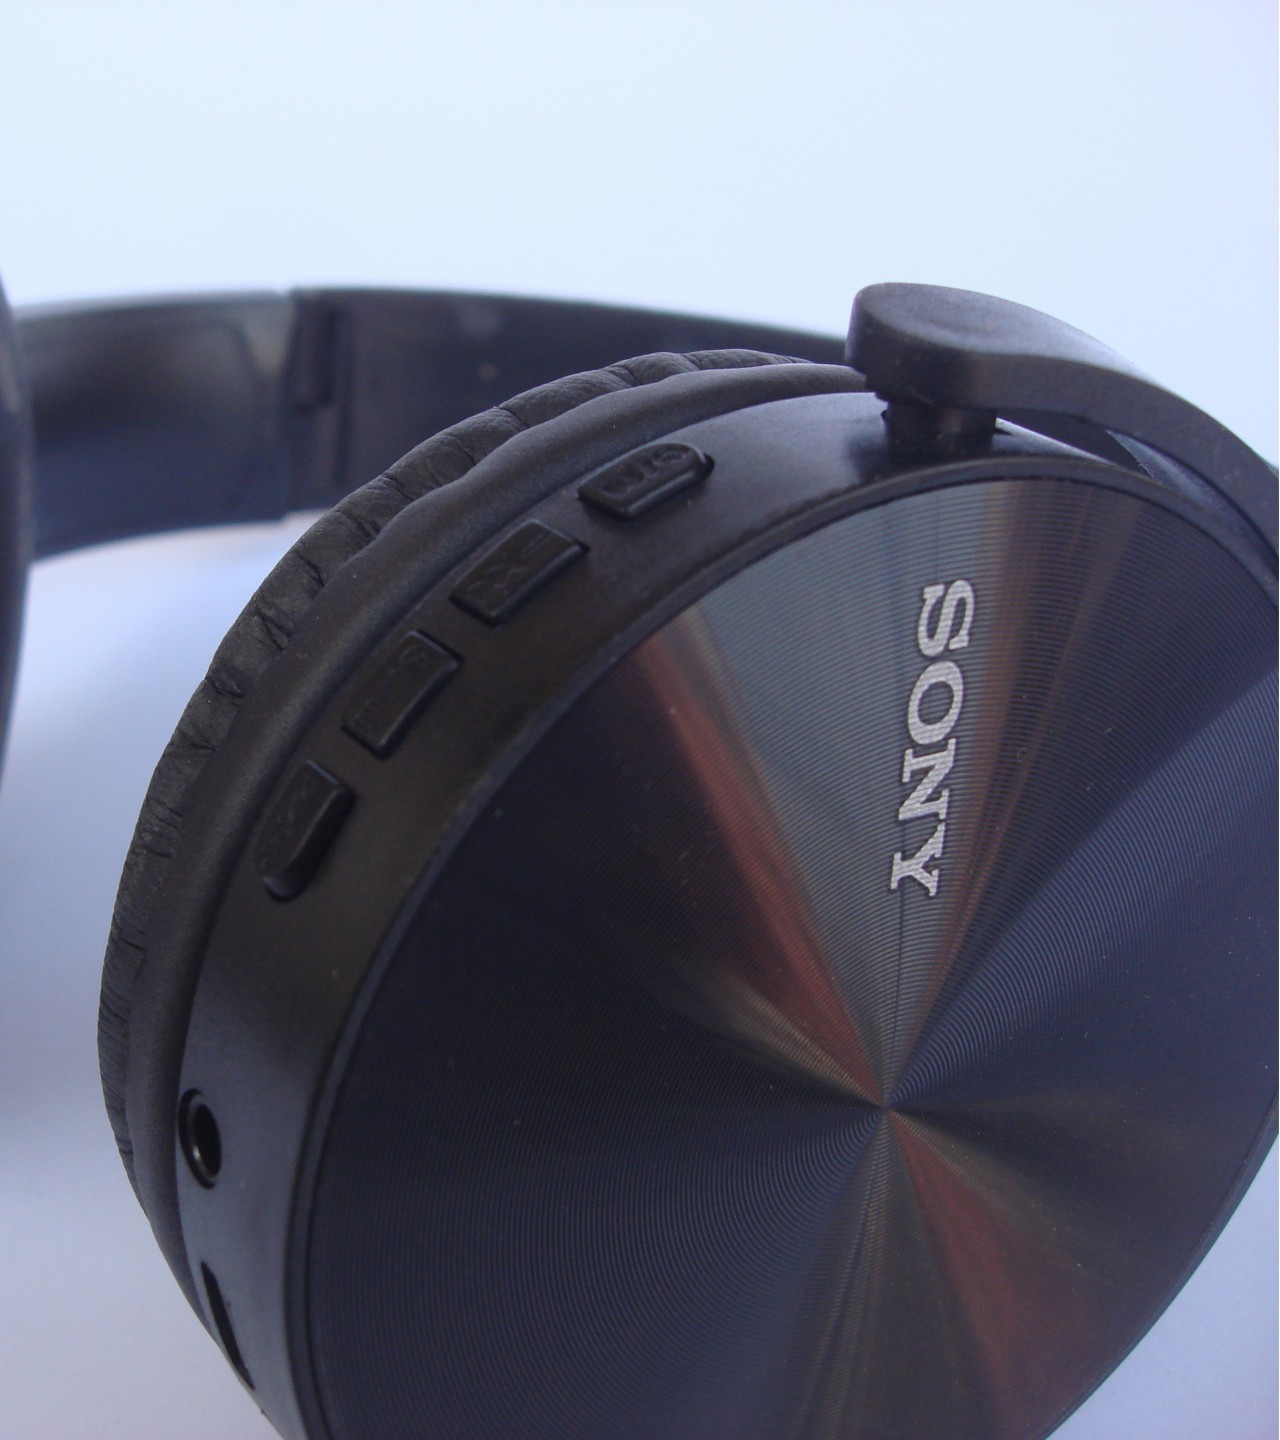 Sony 450BT On-Ear EXTRA BASS wireless Headphones - Black